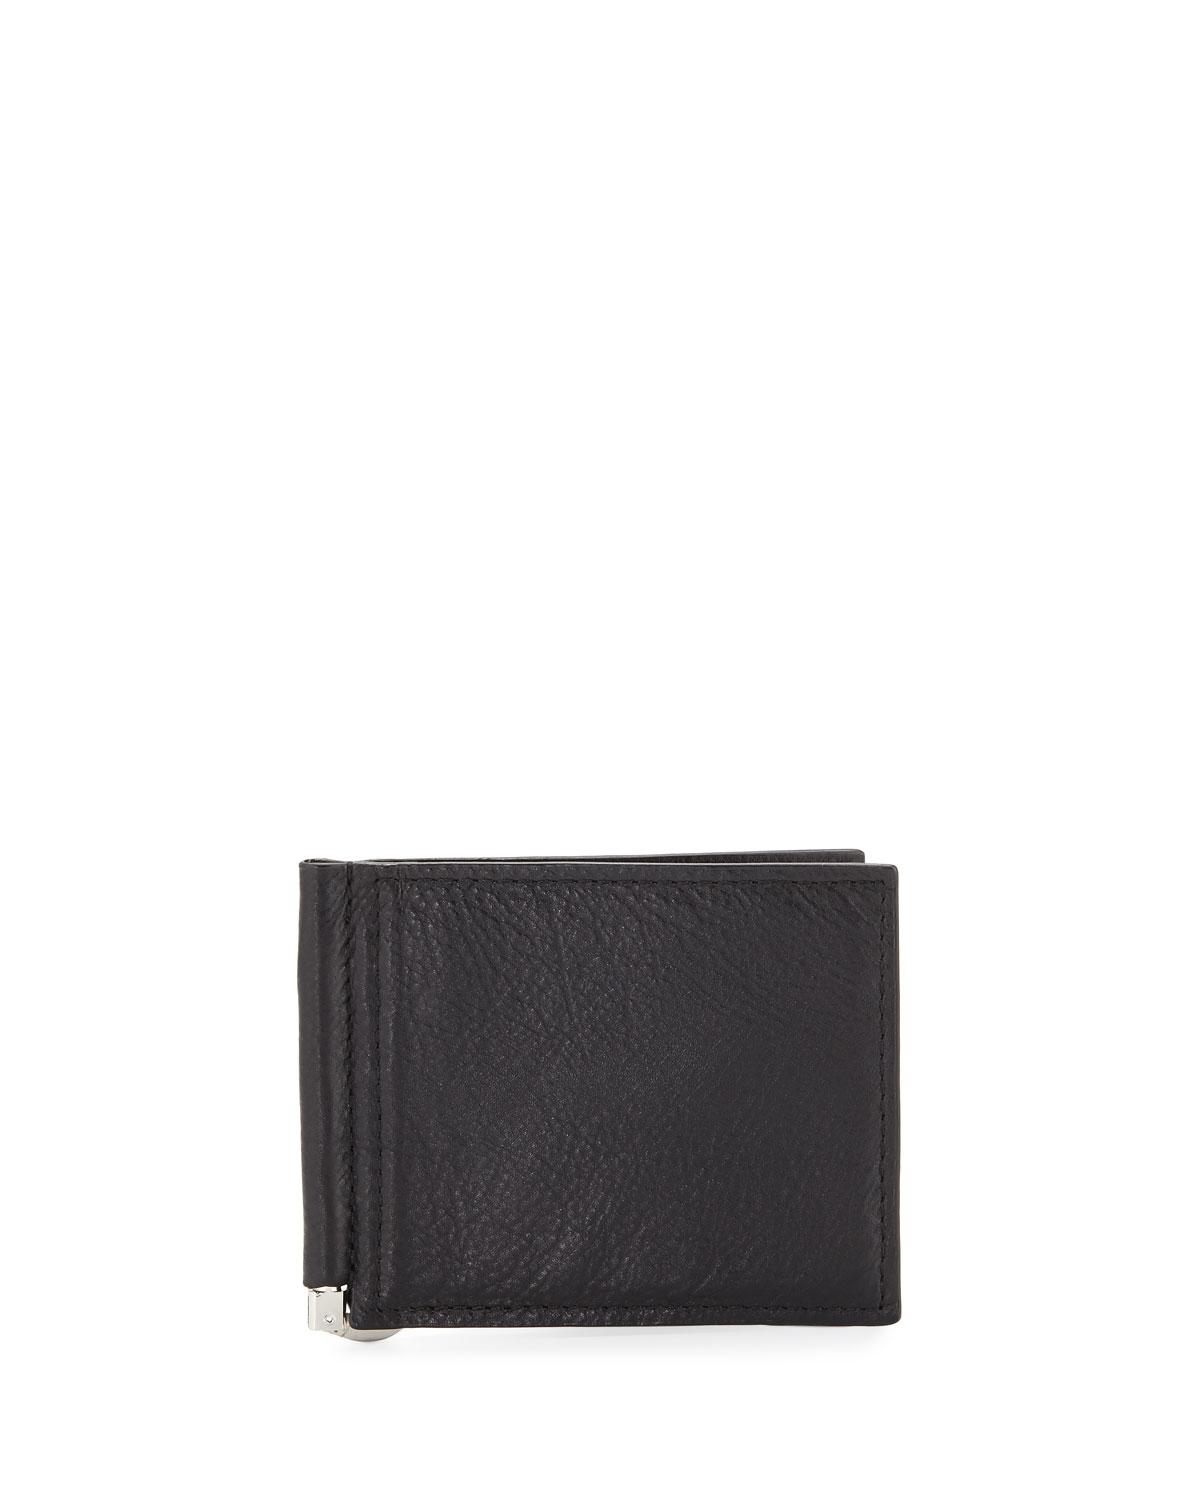 Neiman Marcus Leather Money-clip Bi-fold Wallet in Black for Men - Lyst